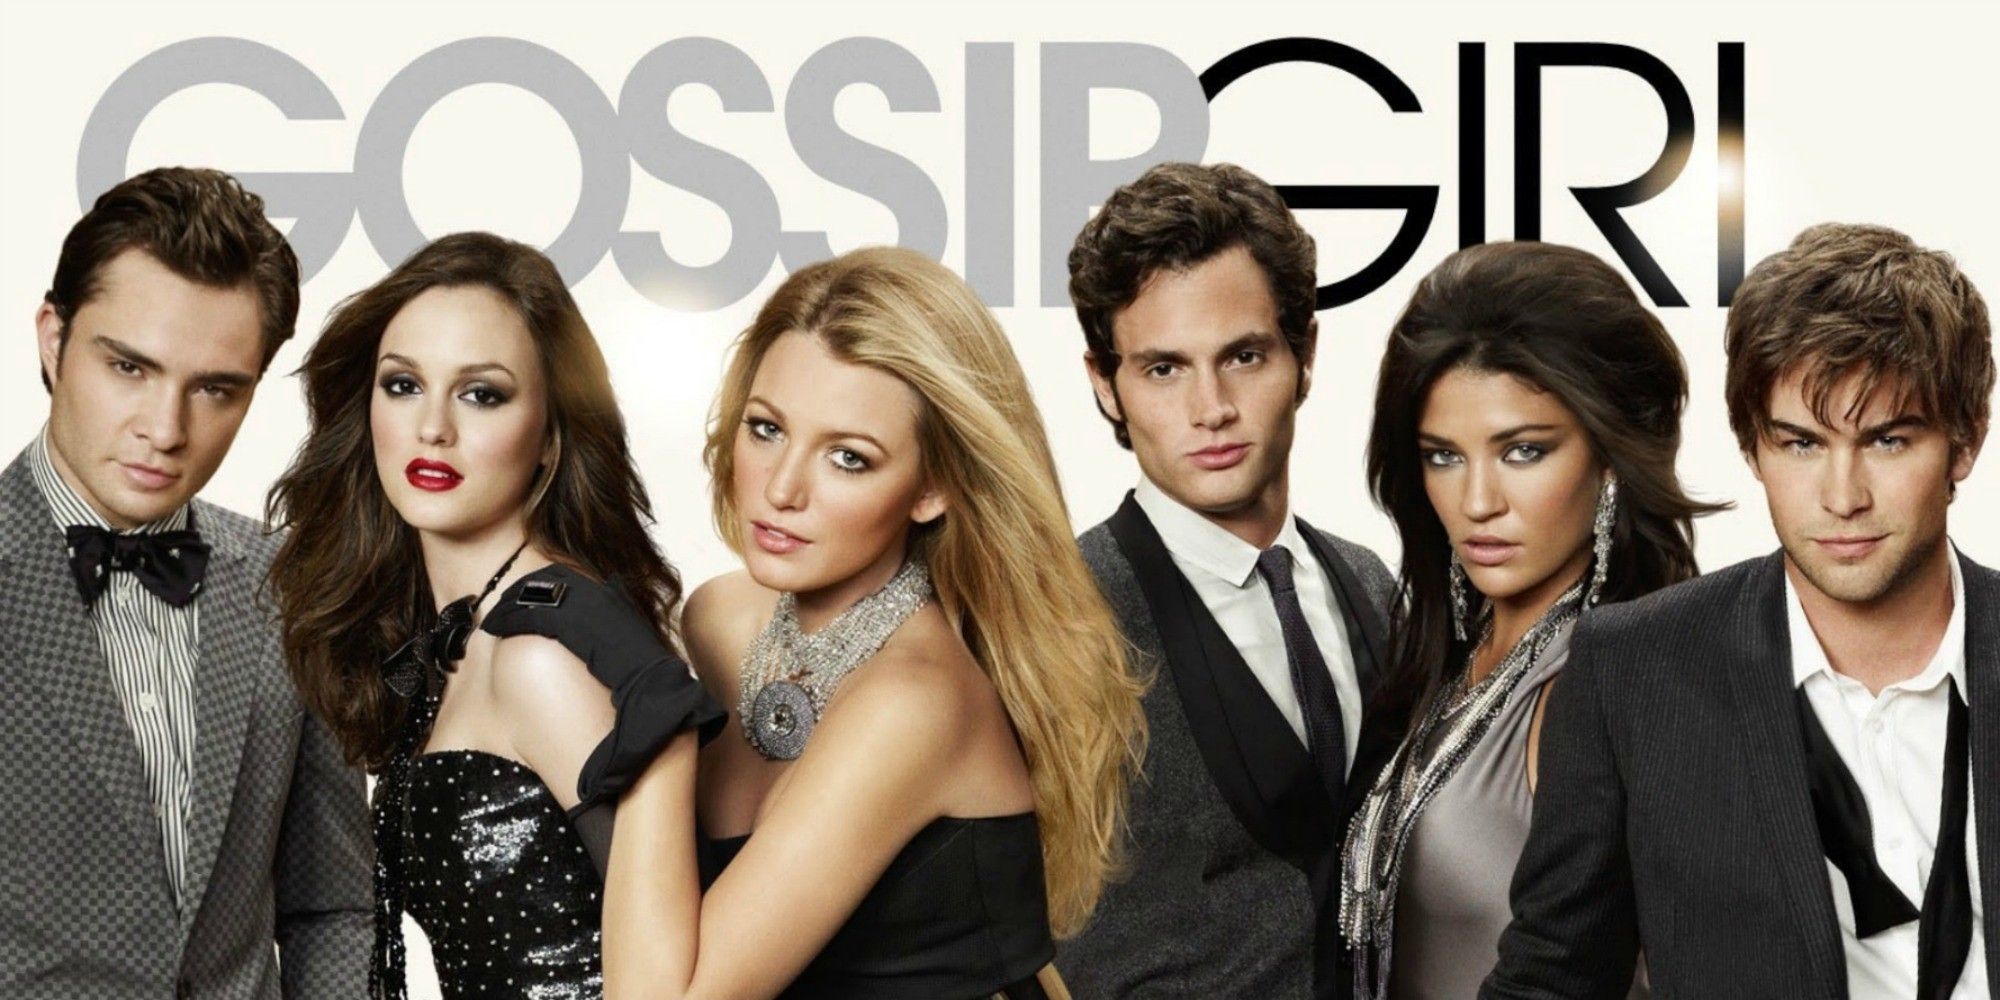 Gossip Girl season 3  Gossip girl cast, Gossip girl seasons, Gossip girl